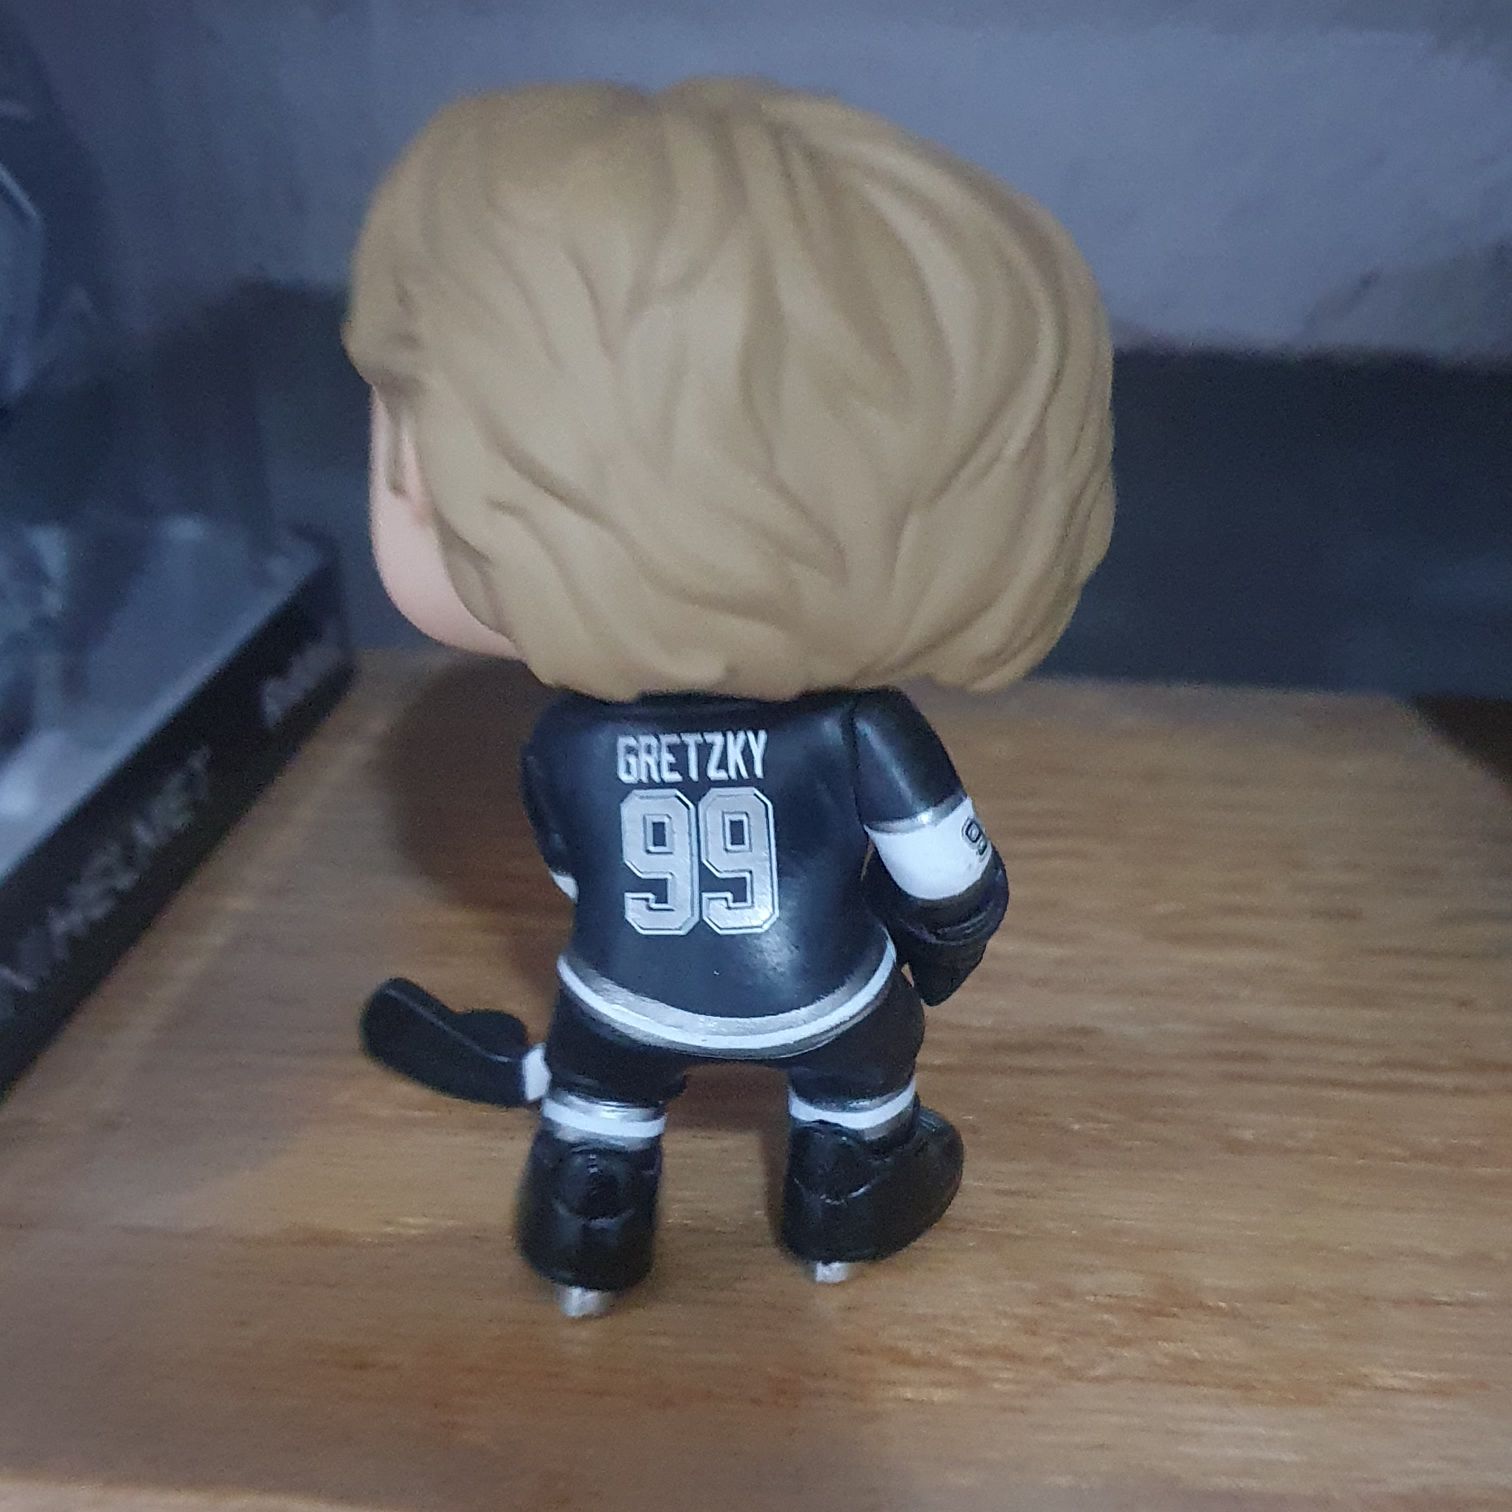 Gretzky - Hockey (Funko) ornament collectible - Main Image 2